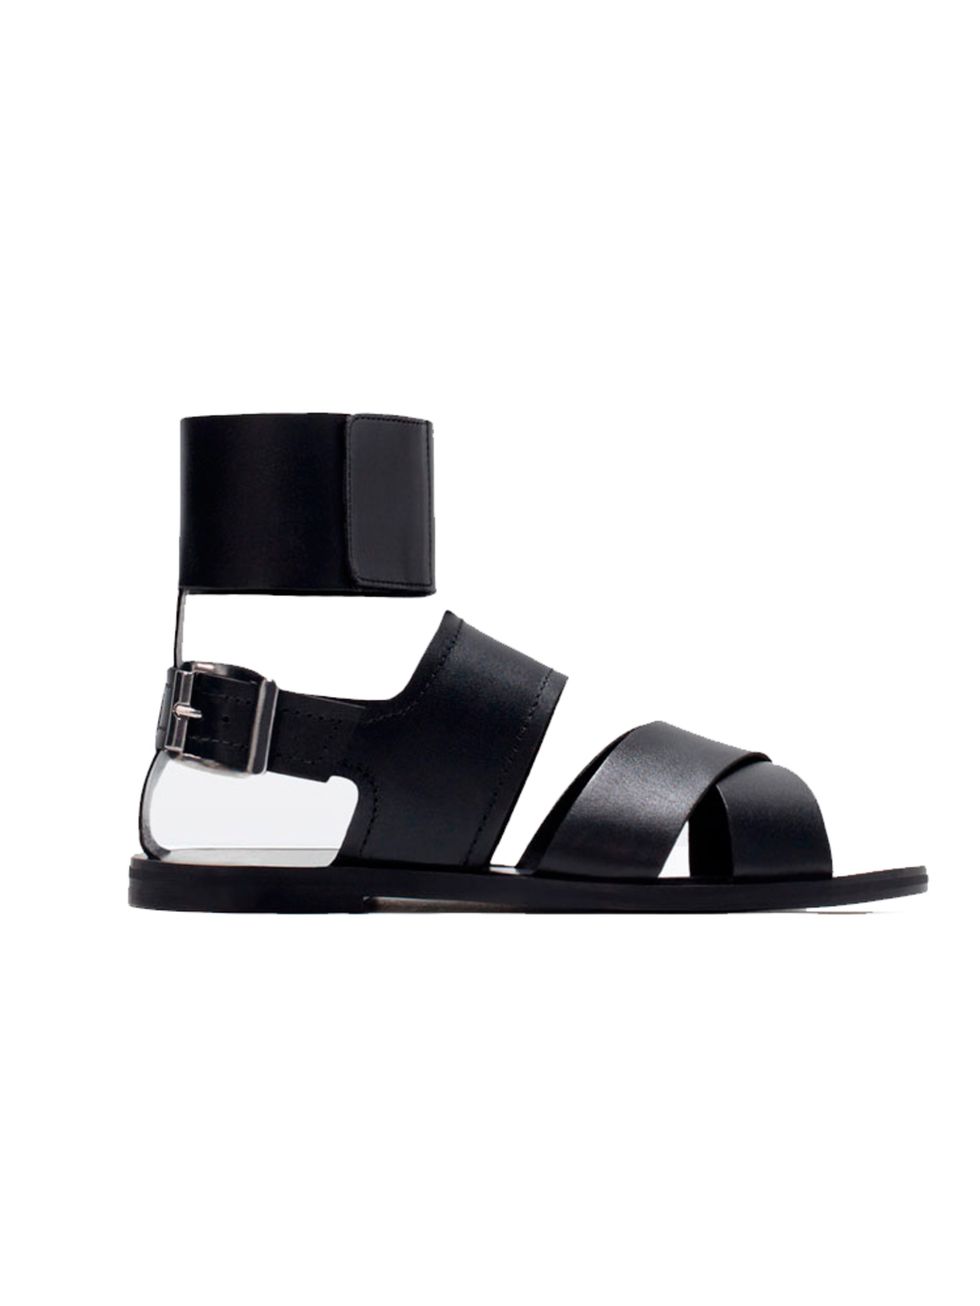 <p><a href="http://www.zara.com/uk/en/new-this-week/woman/wide-strap-leather-sandals-c363008p2613022.html" target="_blank">Zara</a> sandal £49.99</p>